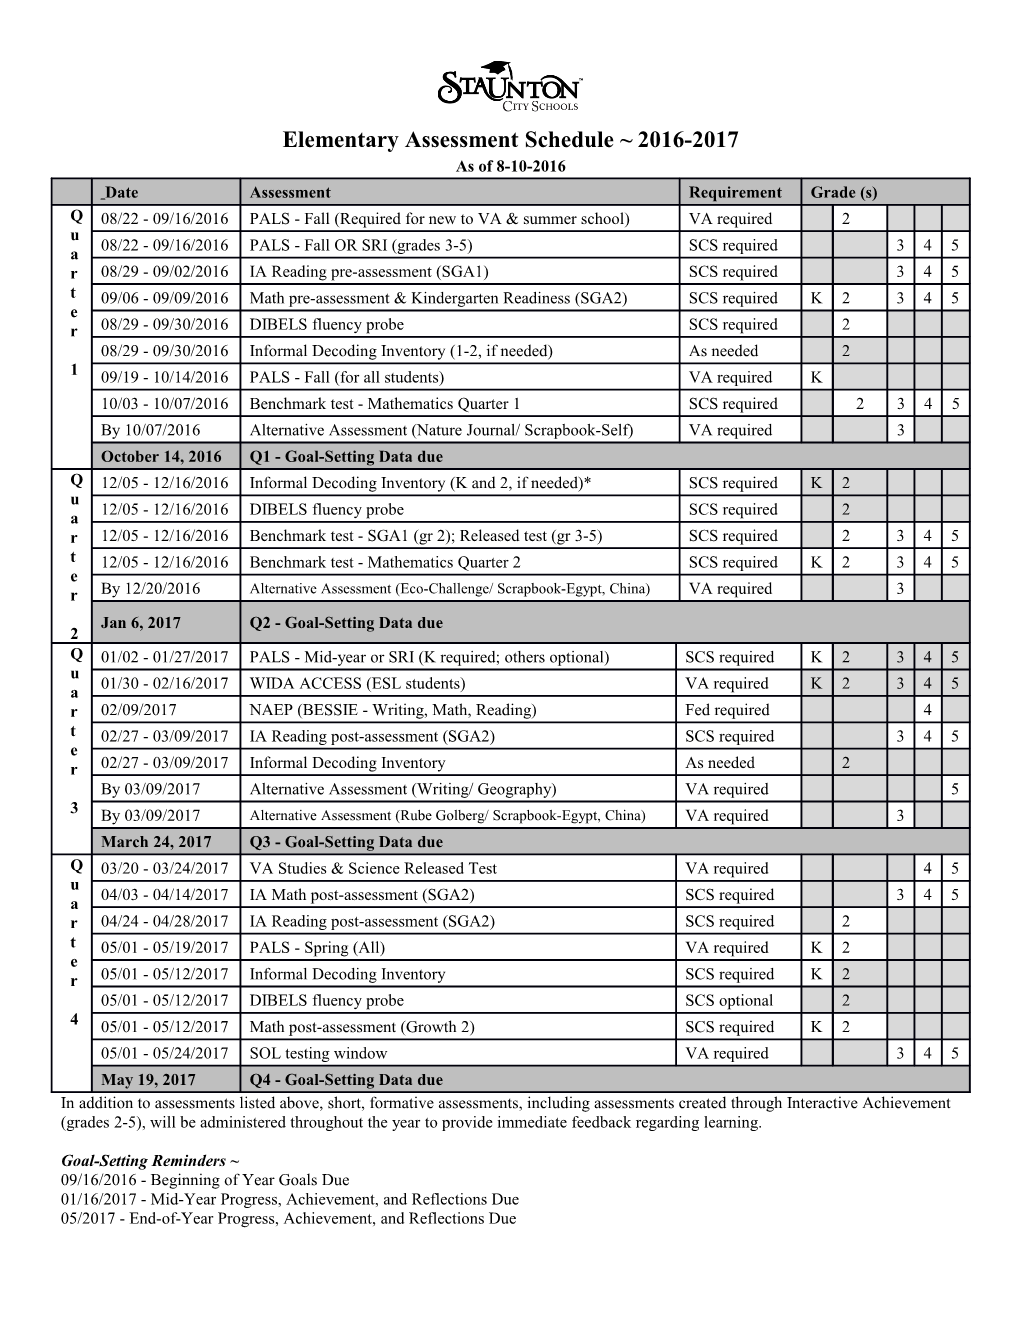 Elementary Assessment Schedule 2016-2017